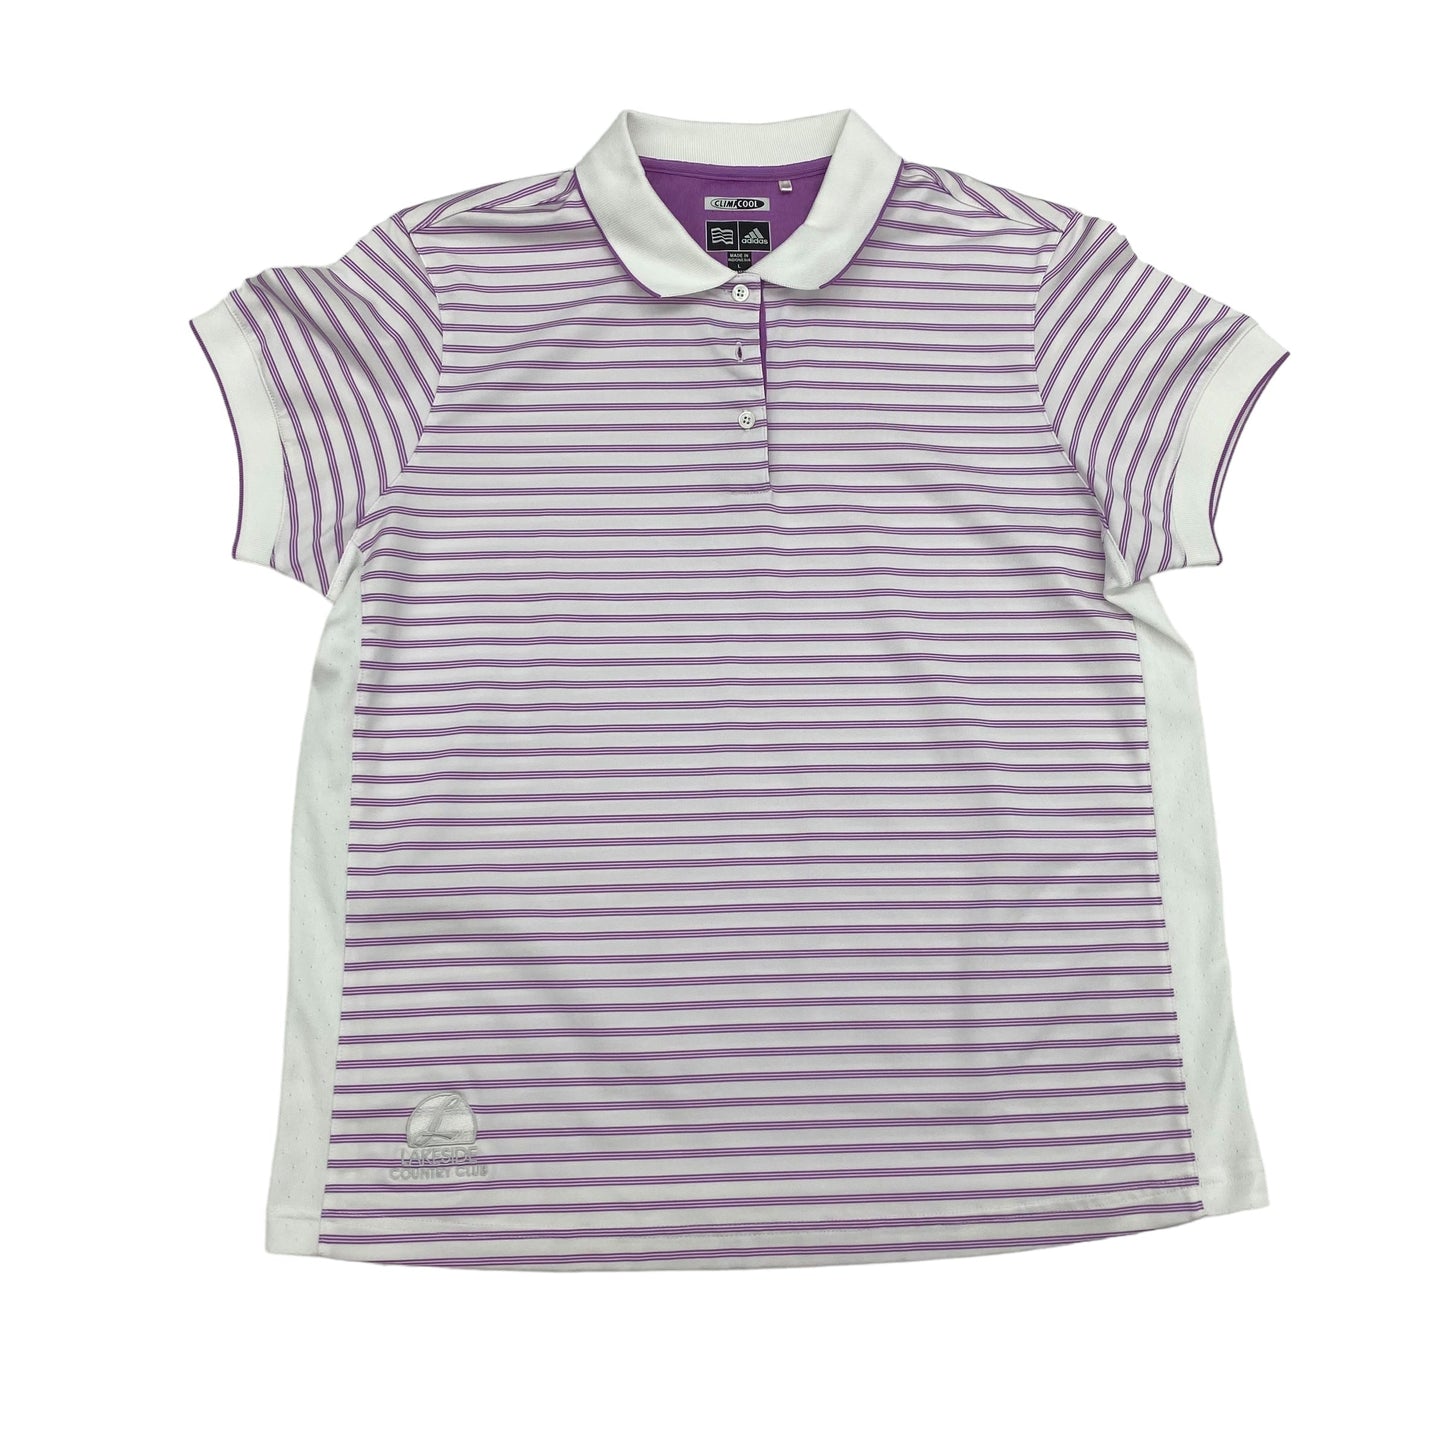 Purple Athletic Top Short Sleeve Adidas, Size L